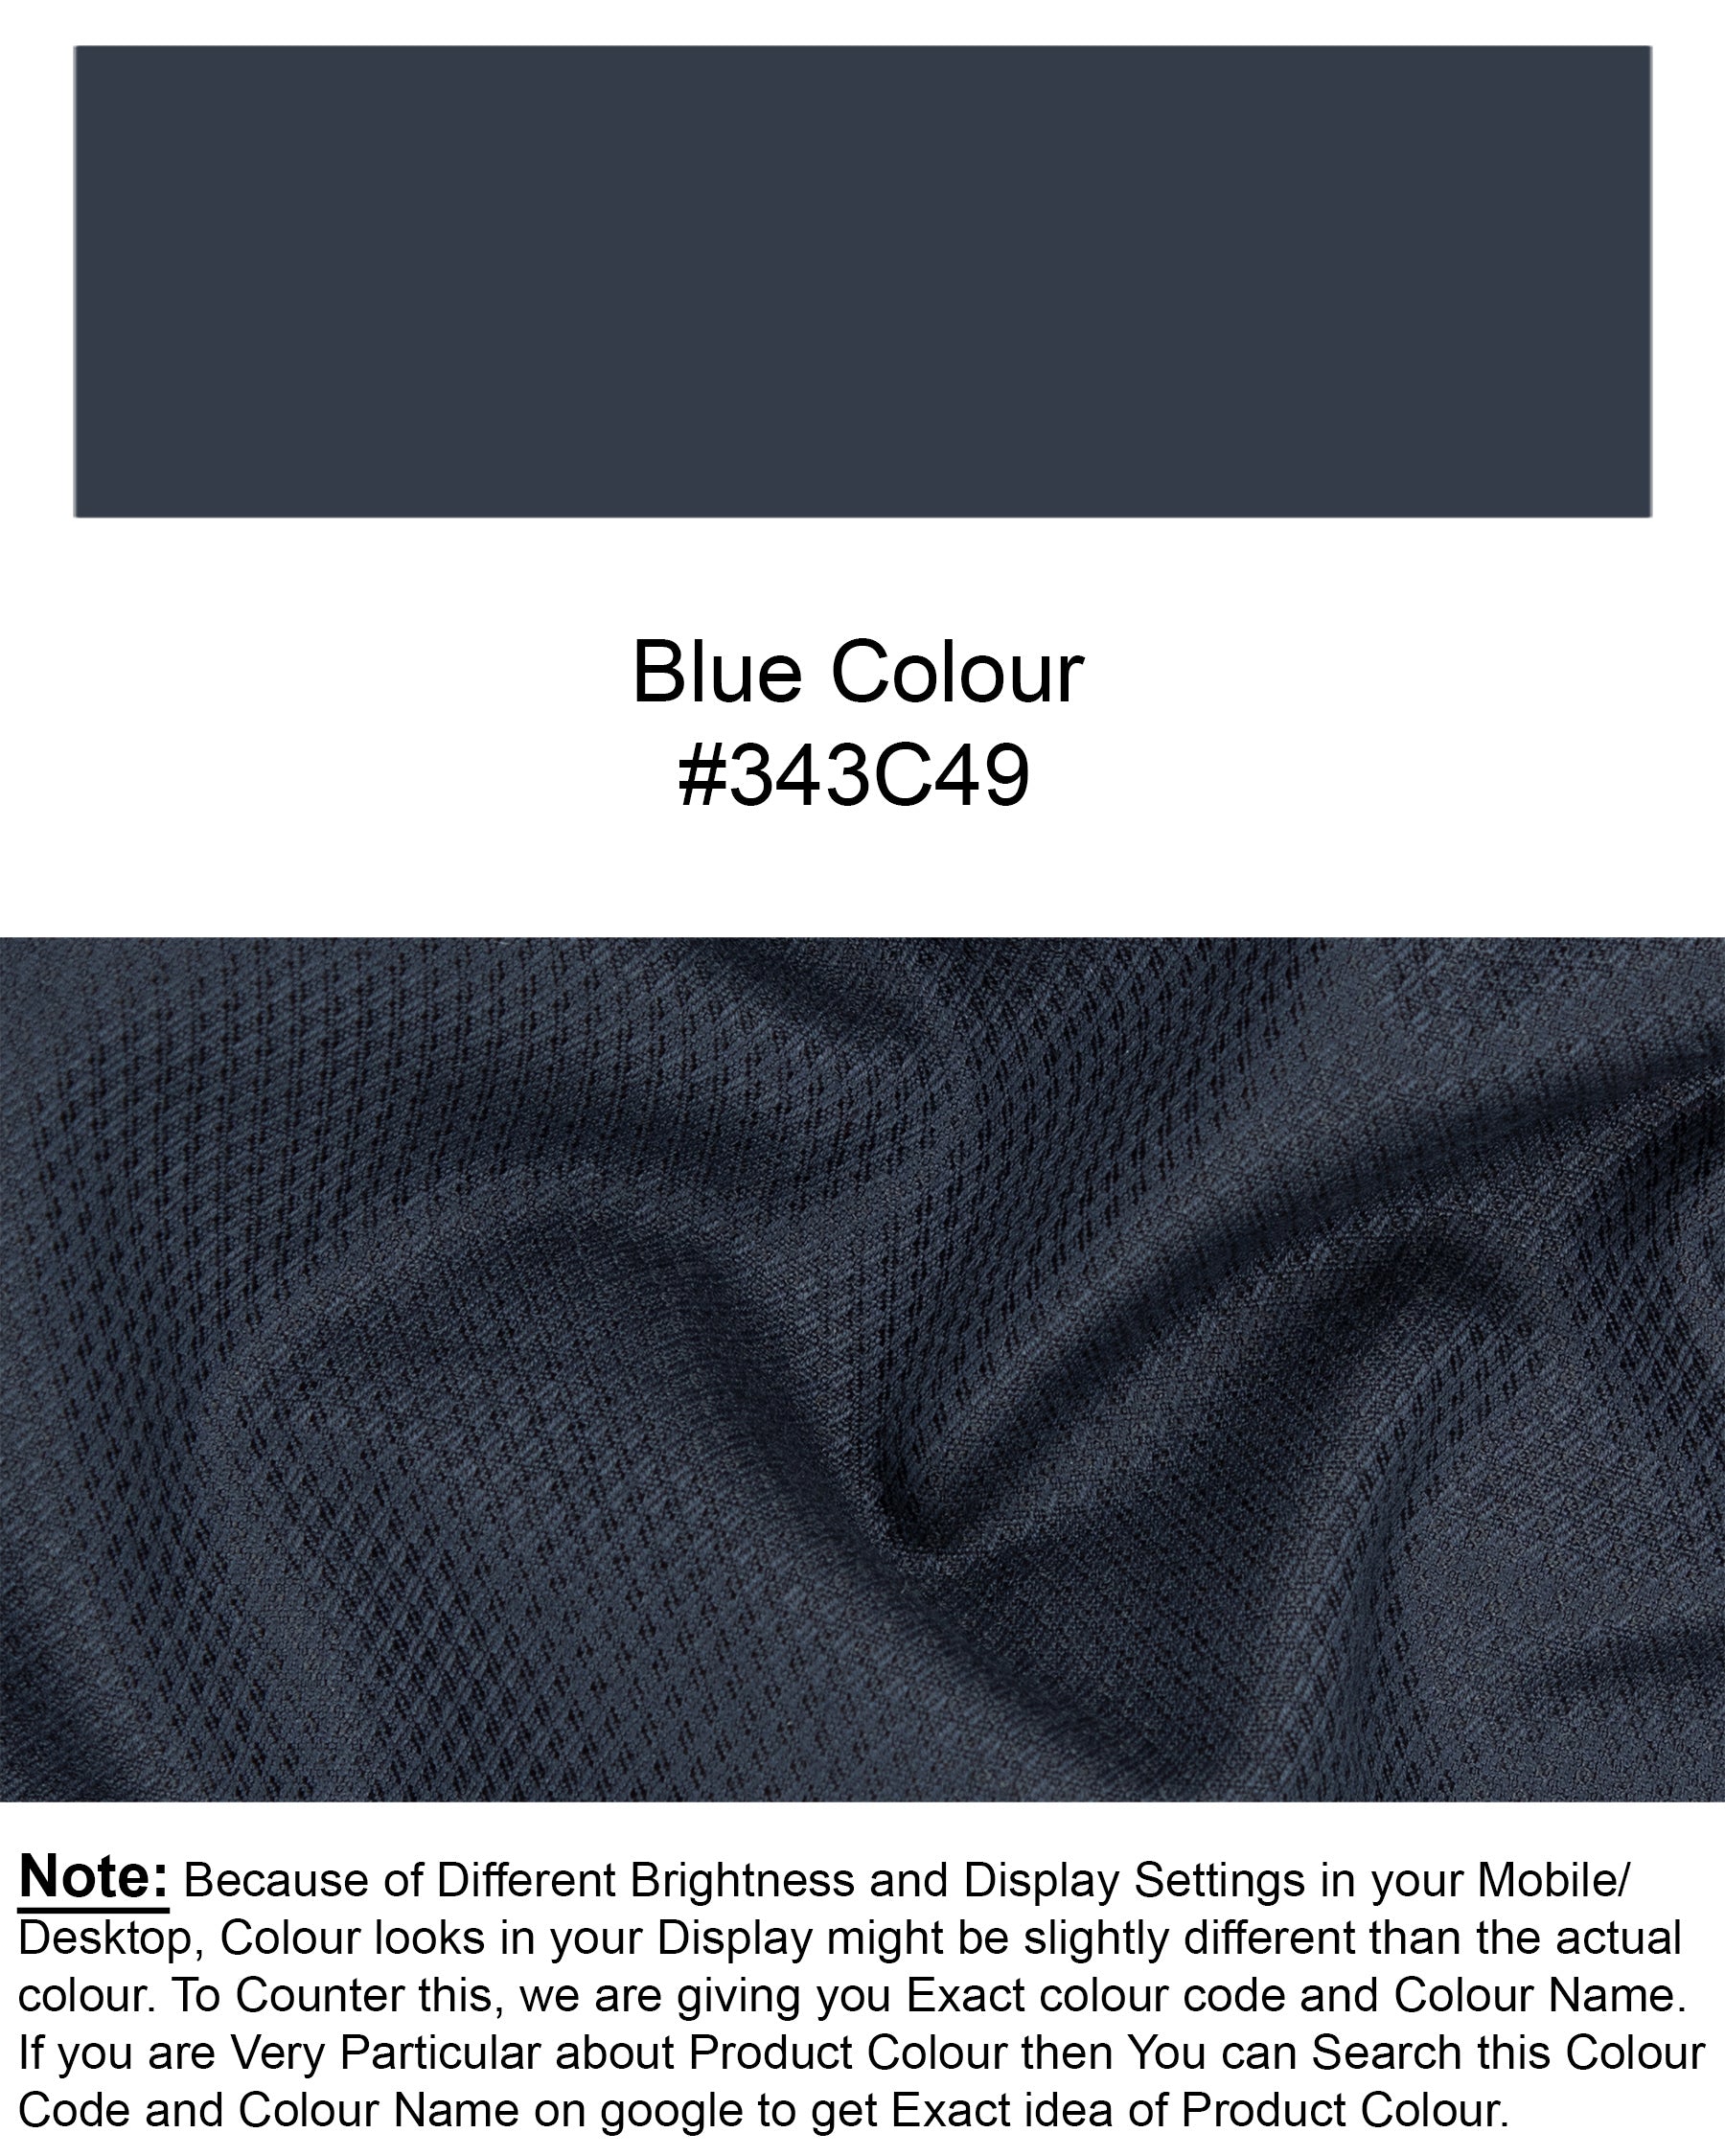 Royal Blue Wool Rich Cross Buttoned Bandhgala/Mandarin Blazer BL1254-CBG-36, BL1254-CBG-38, BL1254-CBG-40, BL1254-CBG-42, BL1254-CBG-44, BL1254-CBG-46, BL1254-CBG-48, BL1254-CBG-50, BL1254-CBG-52, BL1254-CBG-54, BL1254-CBG-56, BL1254-CBG-58, BL1254-CBG-60